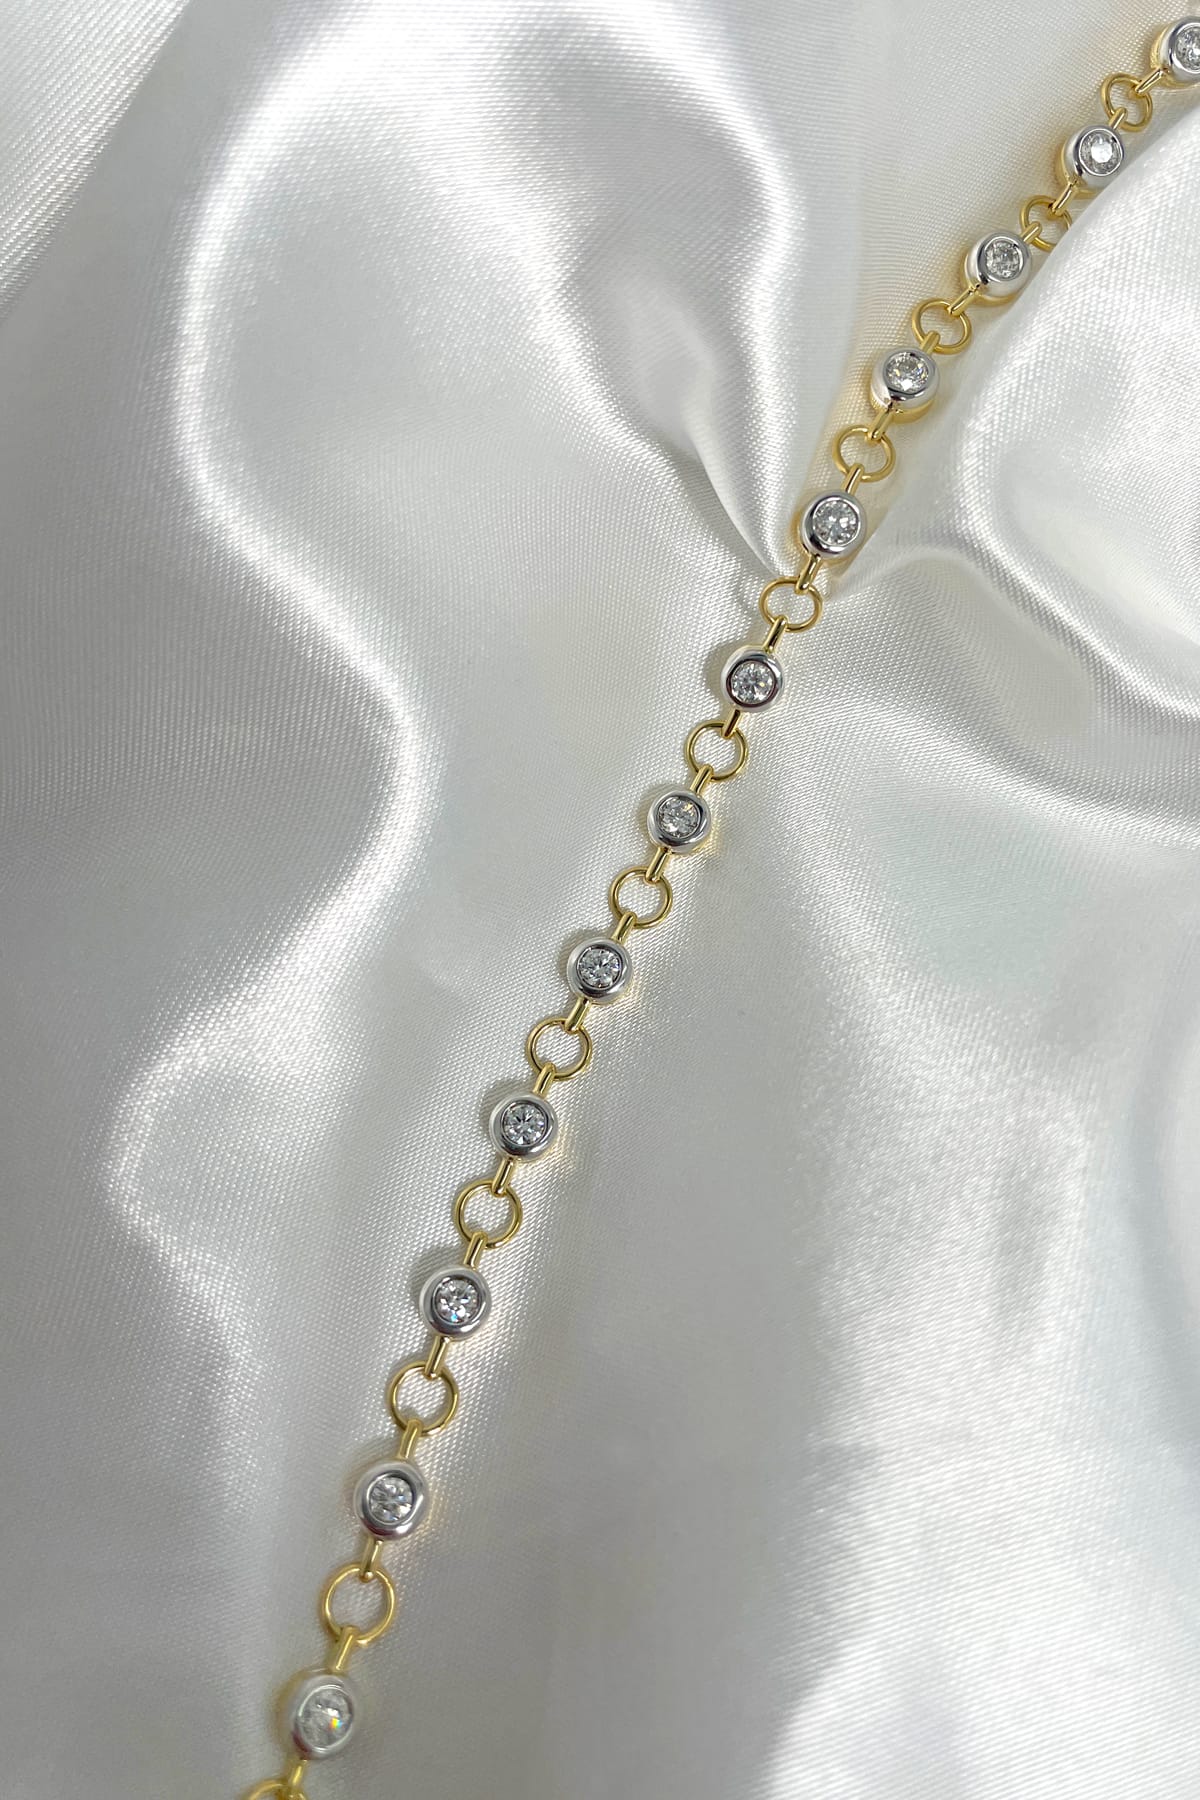 1.51ct Bezel Set Diamond Bracelet set in 18ct Yellow and White Gold available at LeGassick Diamonds and Jewellery Gold Coast, Australia.